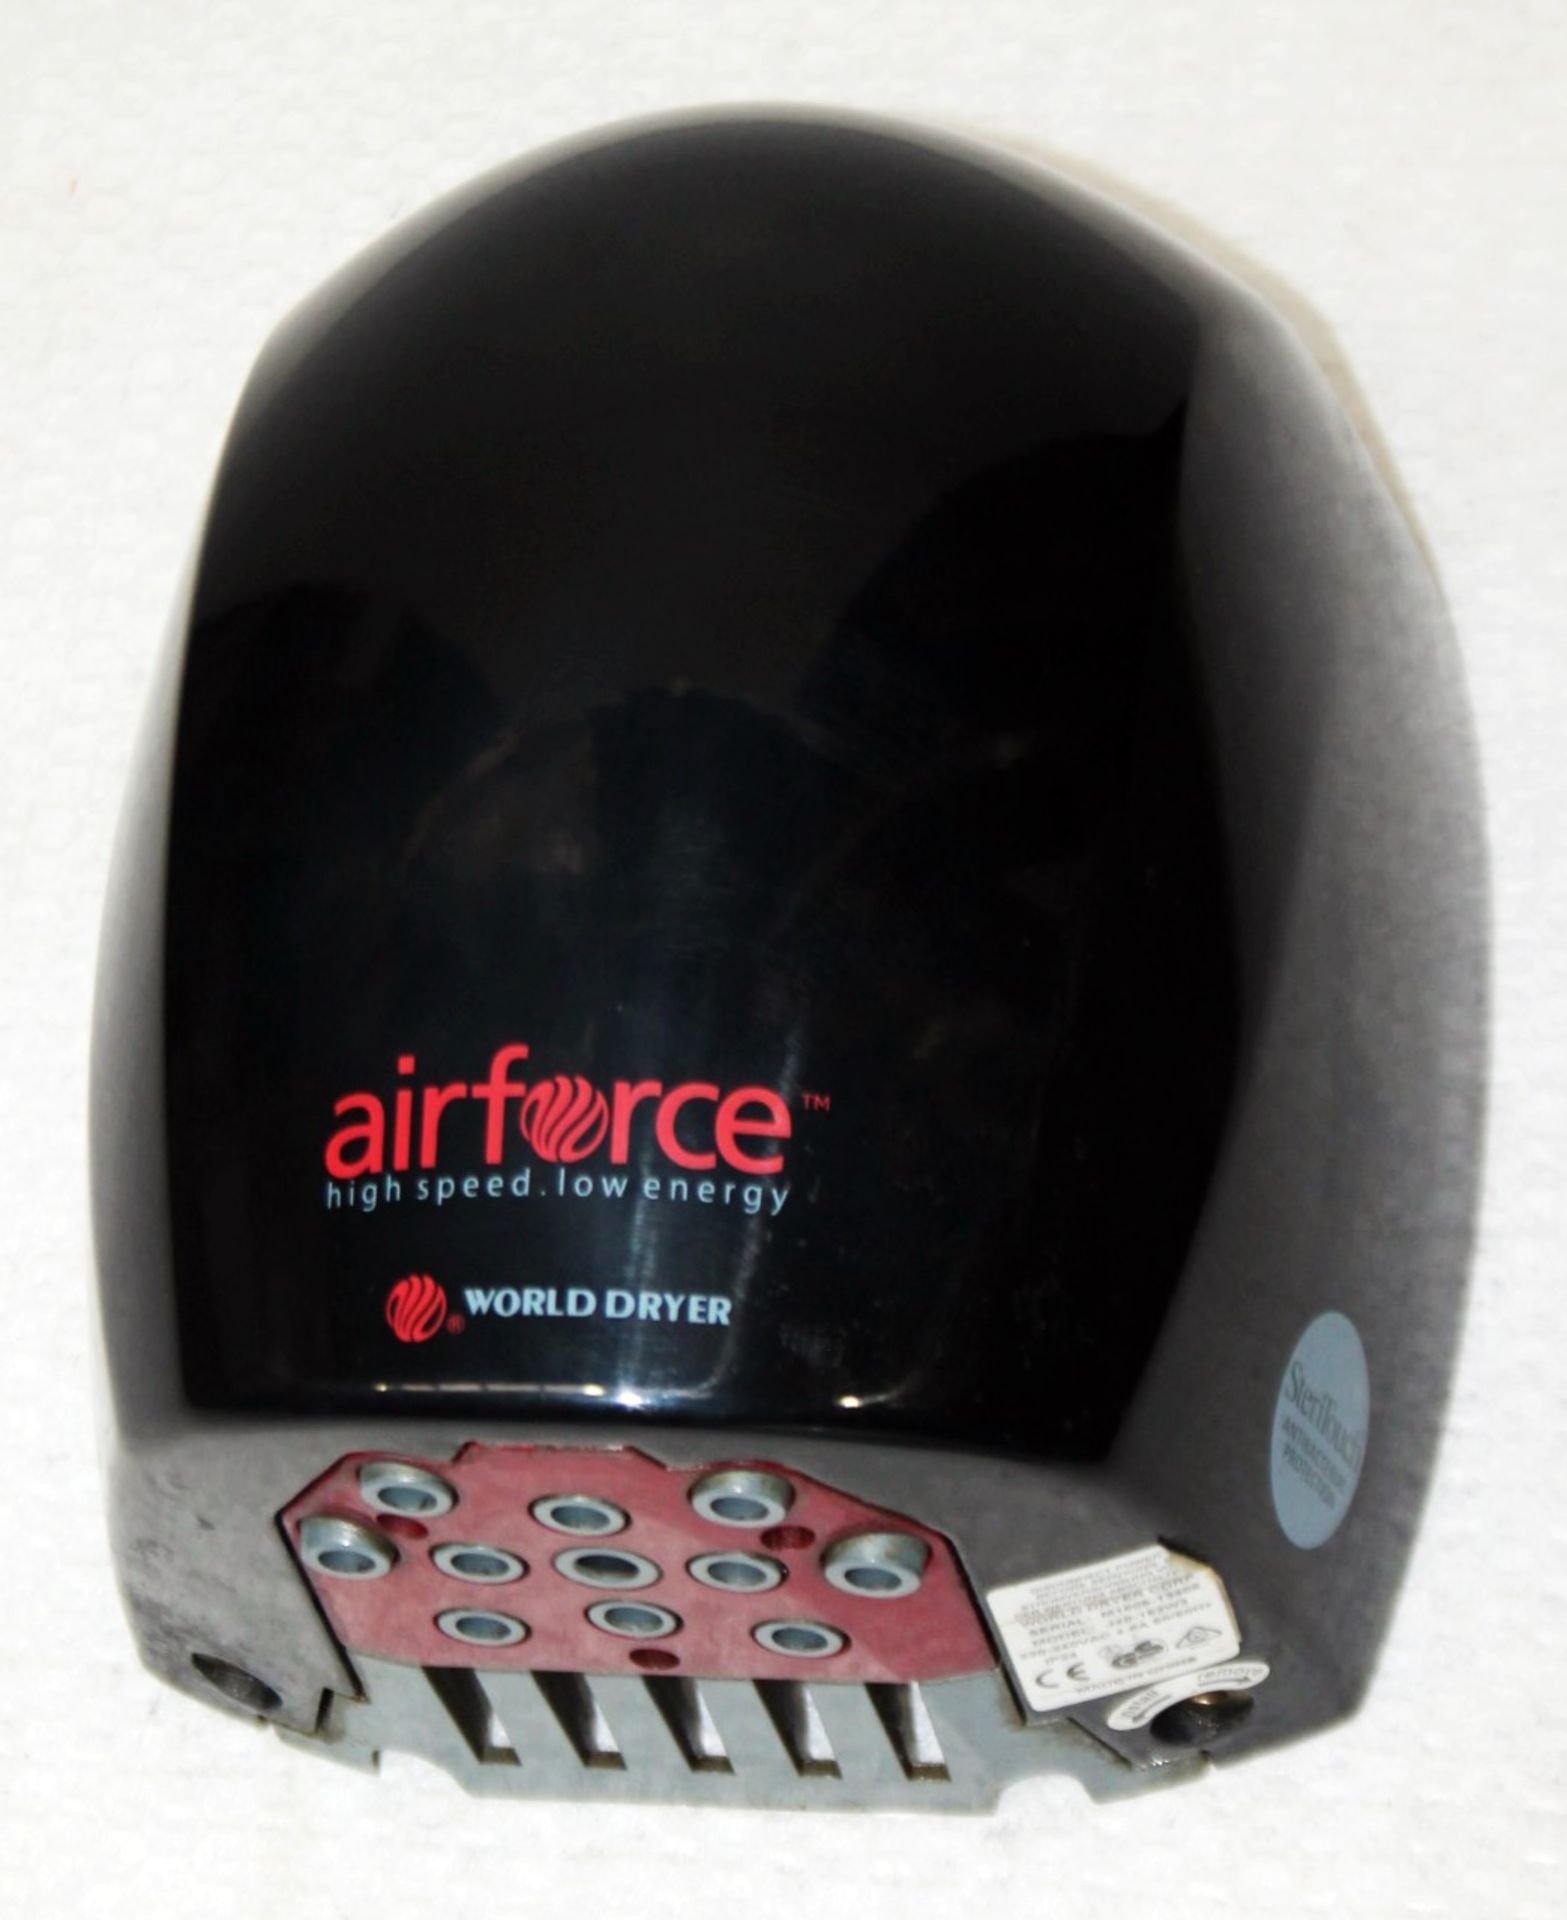 1 x Warner Howard 'Airforce' Commercial Hand Dryer In Black - Ref: WAN107 - Original RRP £391.00 - - Image 4 of 5